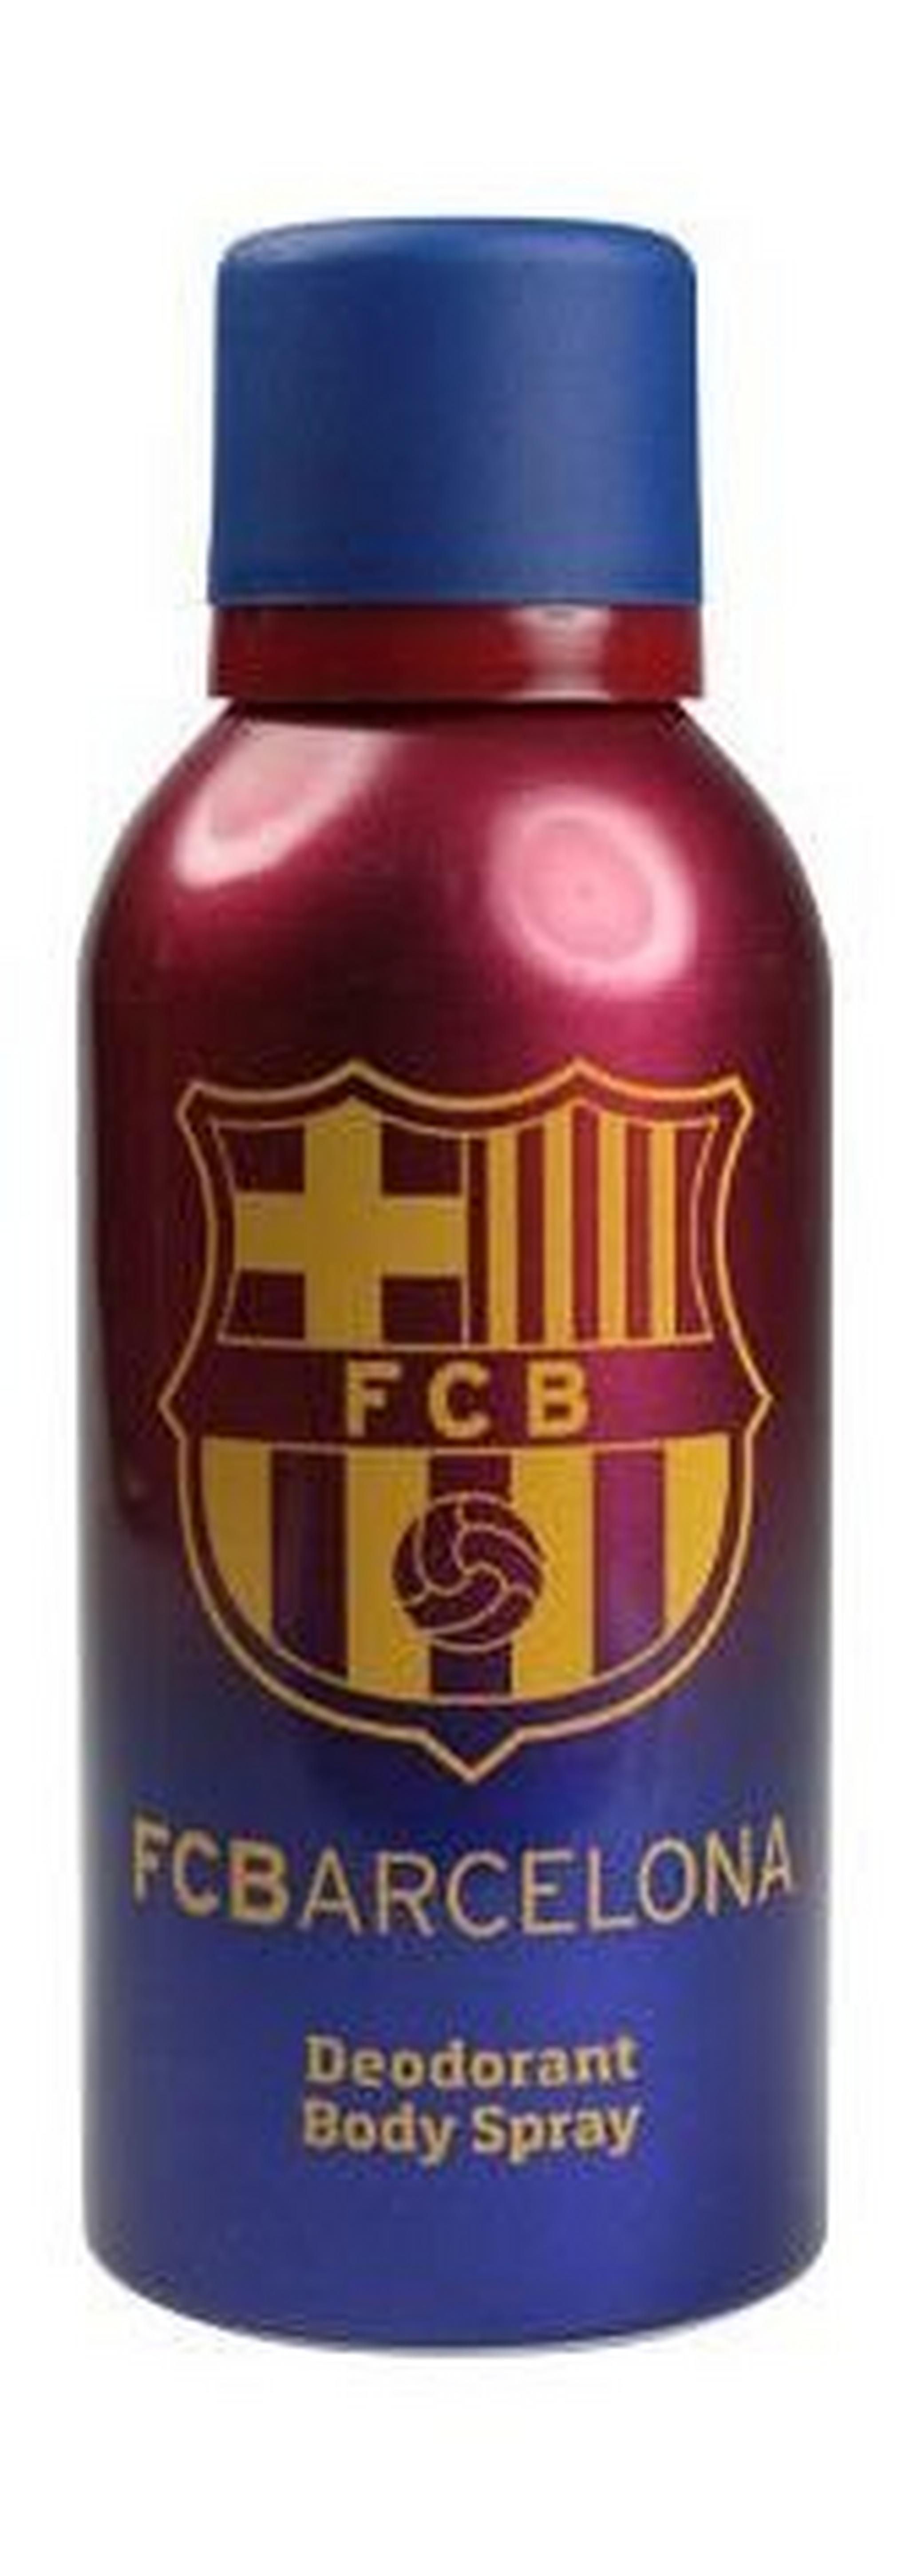 Cartoon Network Futbol Club Barcelona For Kids 150ML Deodorant Body Spray